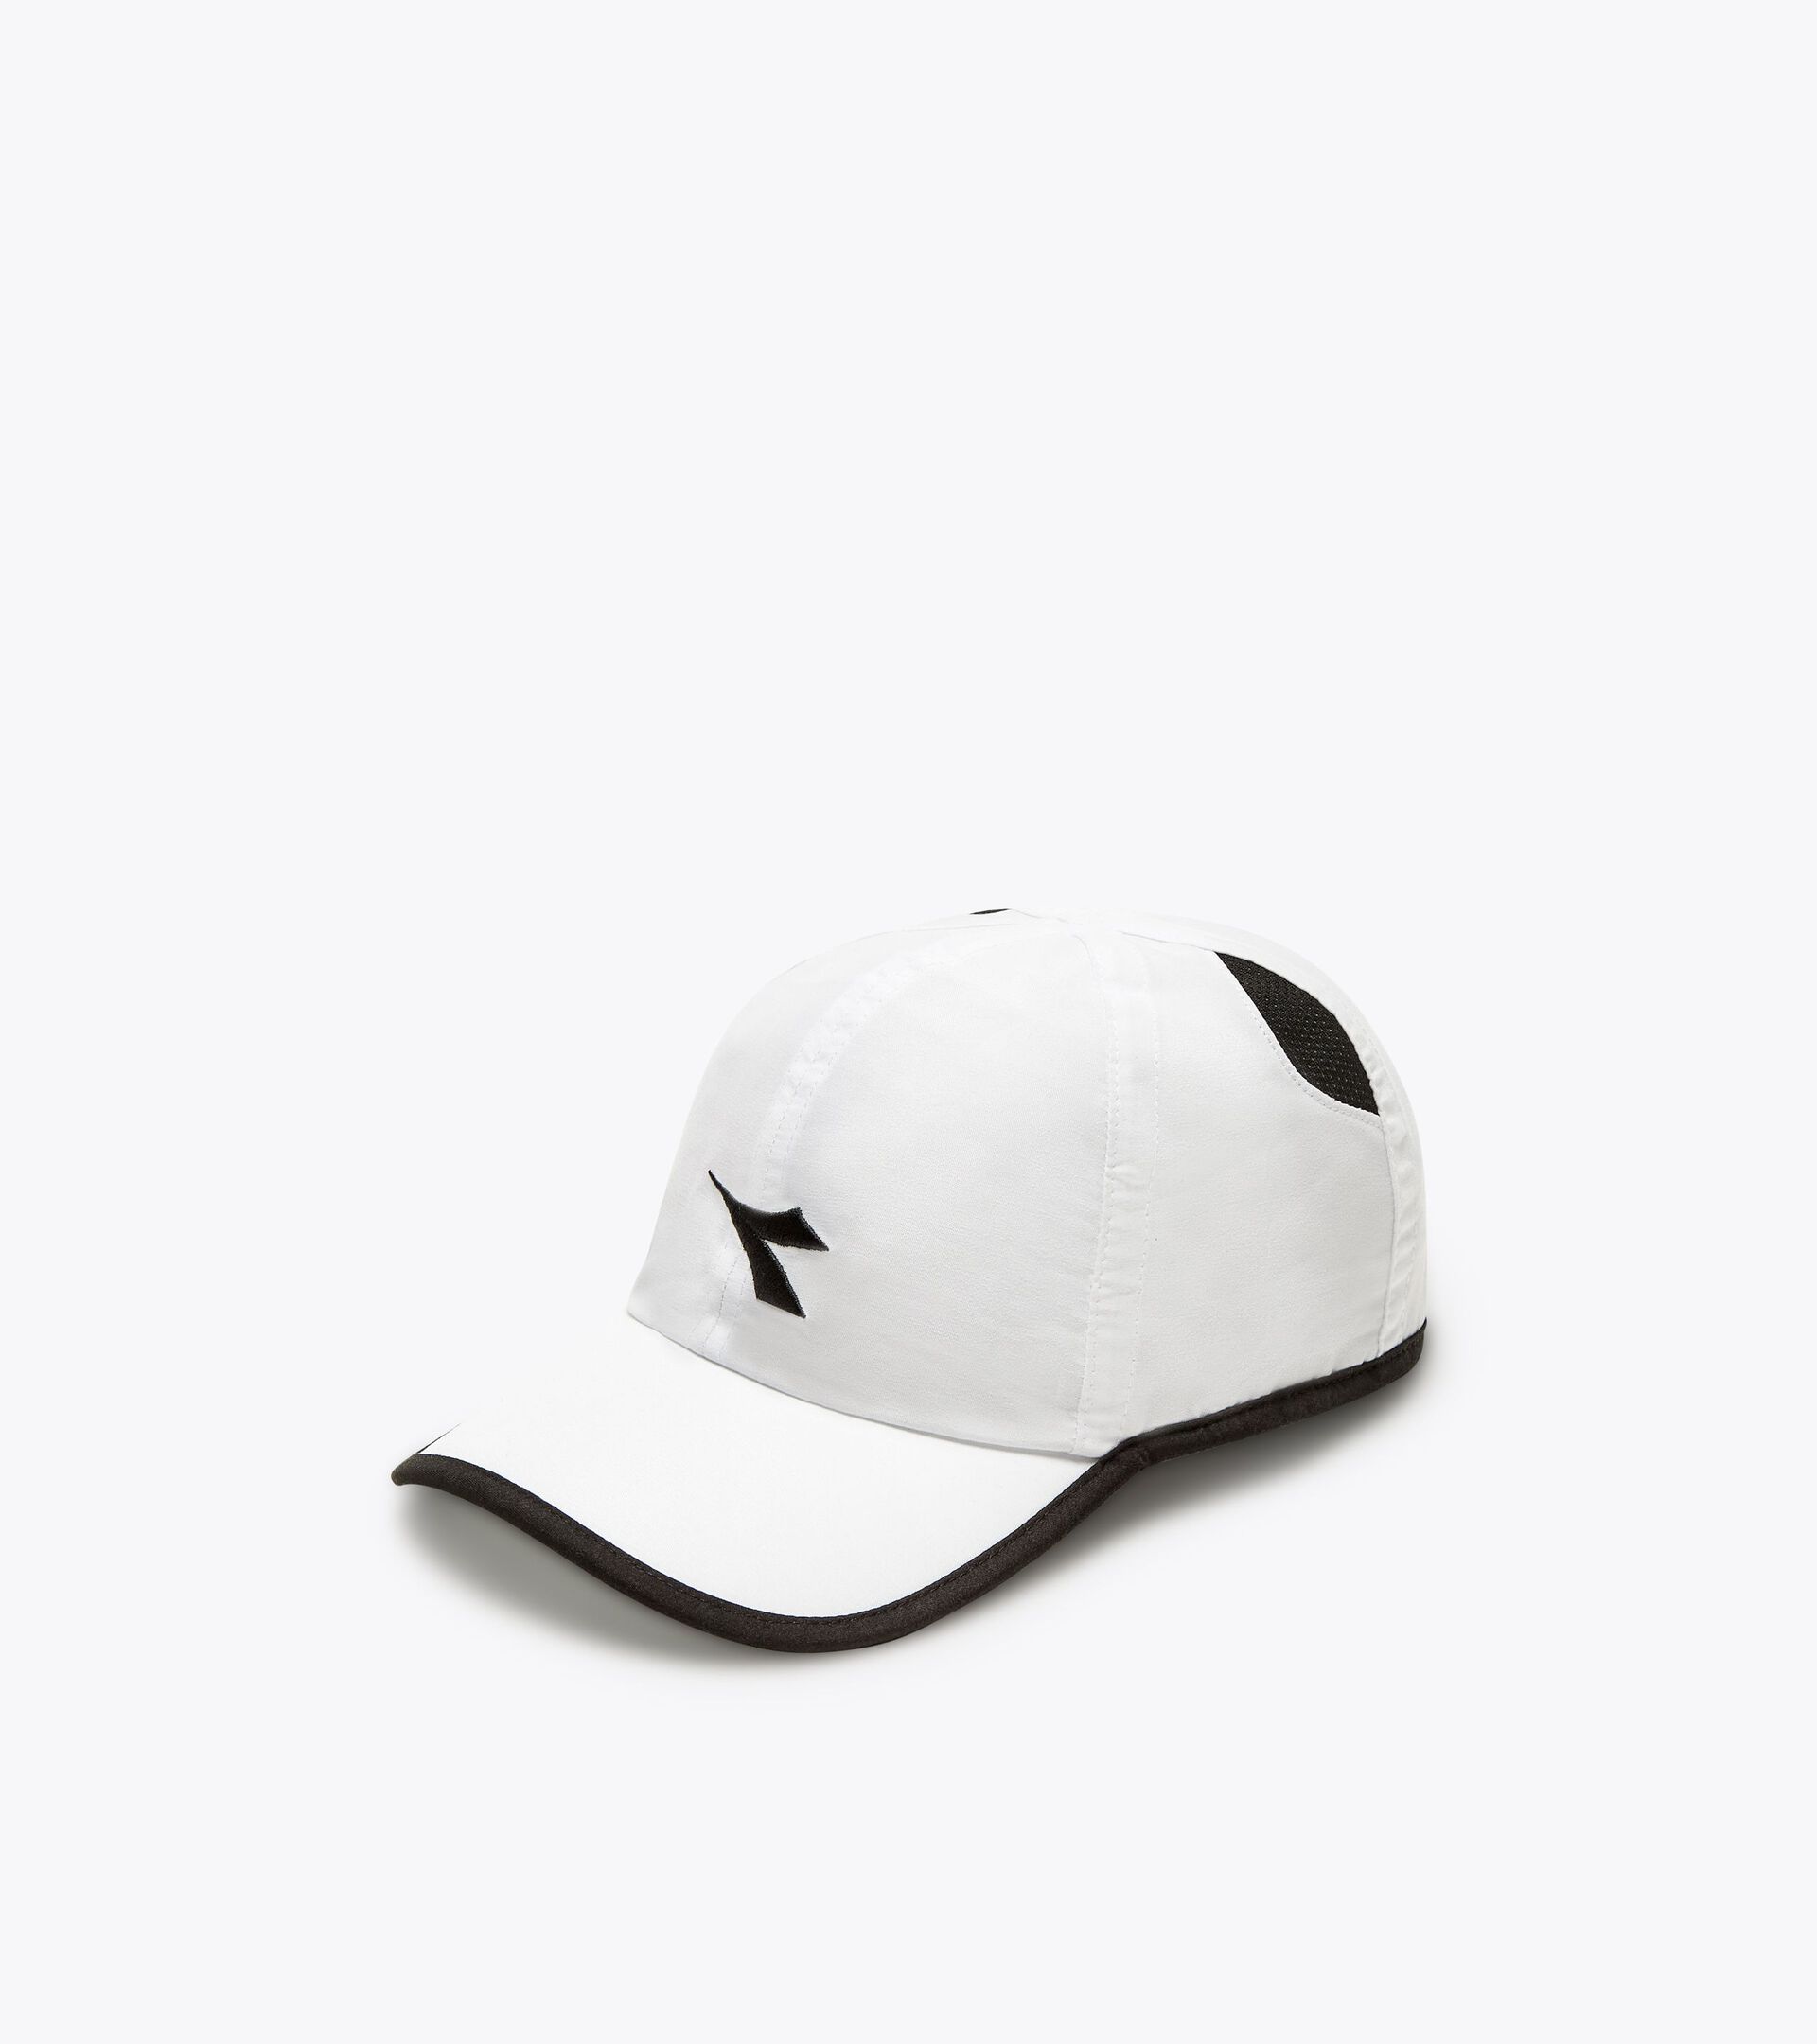 Tennis-style hat ADJUSTABLE CAP WHITE/BLACK - Diadora